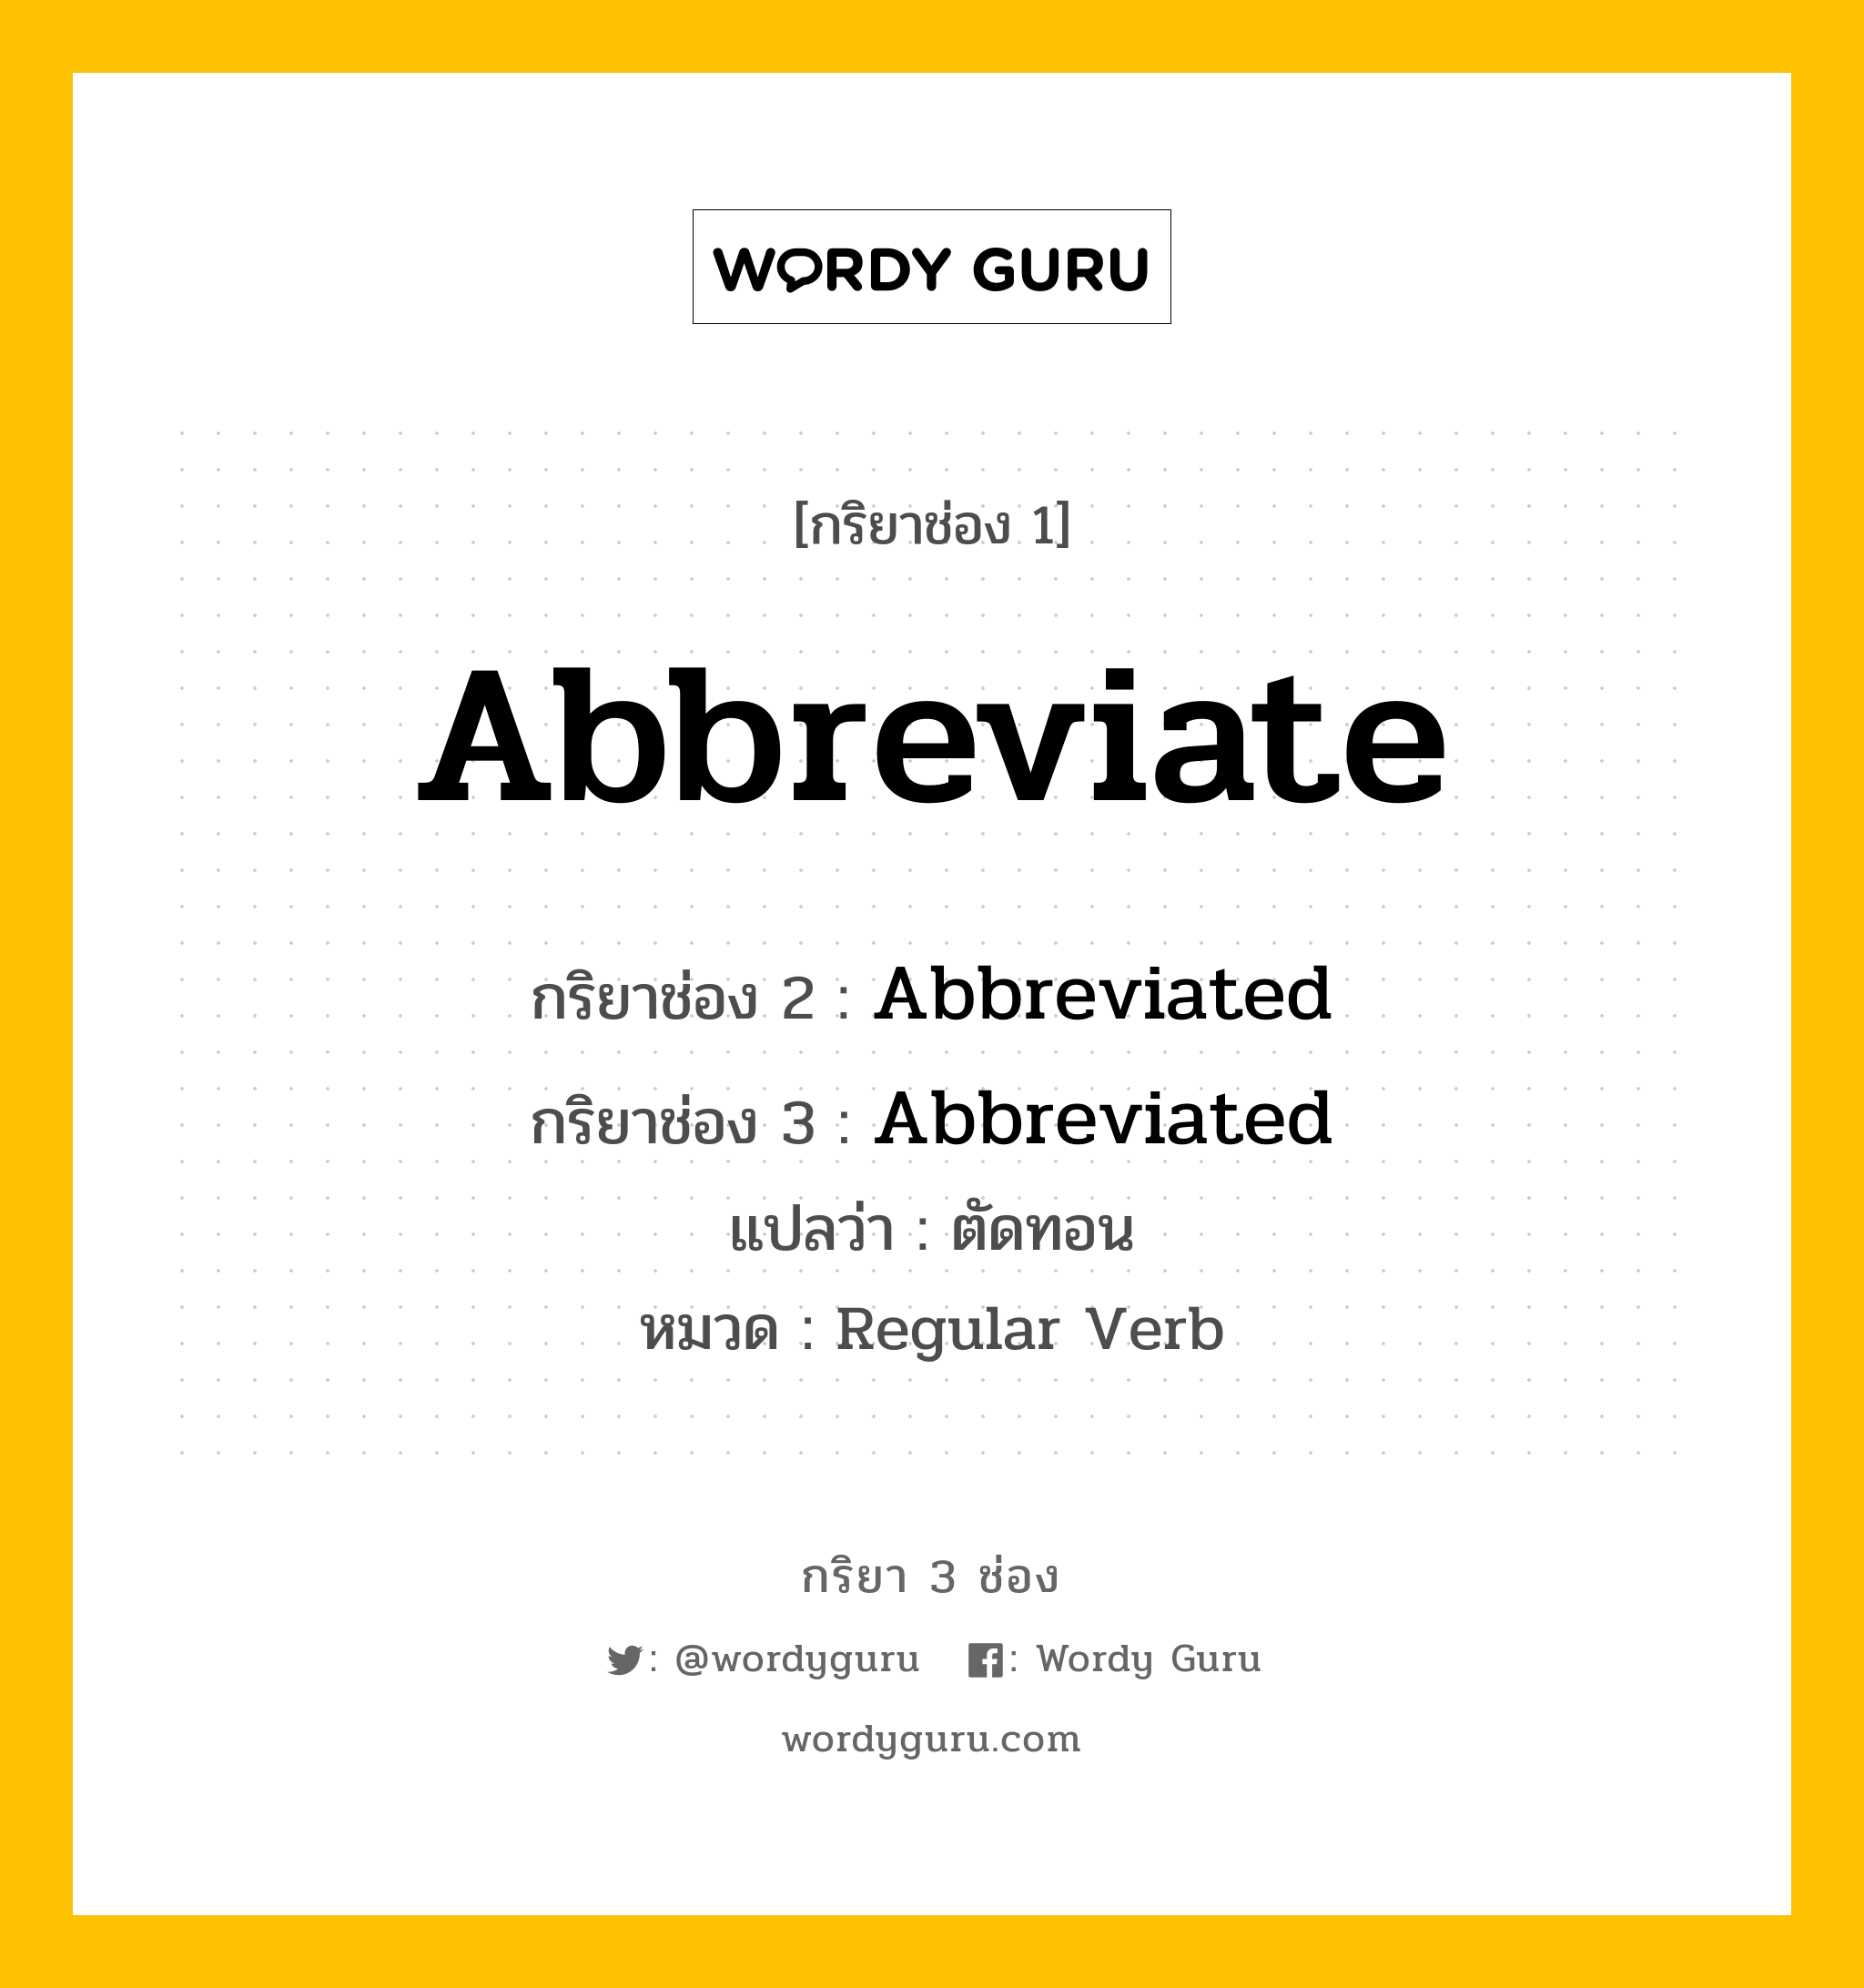 Abbreviate มีกริยา 3 ช่องอะไรบ้าง? คำศัพท์ในกลุ่มประเภท Regular Verb, กริยาช่อง 1 Abbreviate กริยาช่อง 2 Abbreviated กริยาช่อง 3 Abbreviated แปลว่า ตัดทอน หมวด Regular Verb หมวด Regular Verb